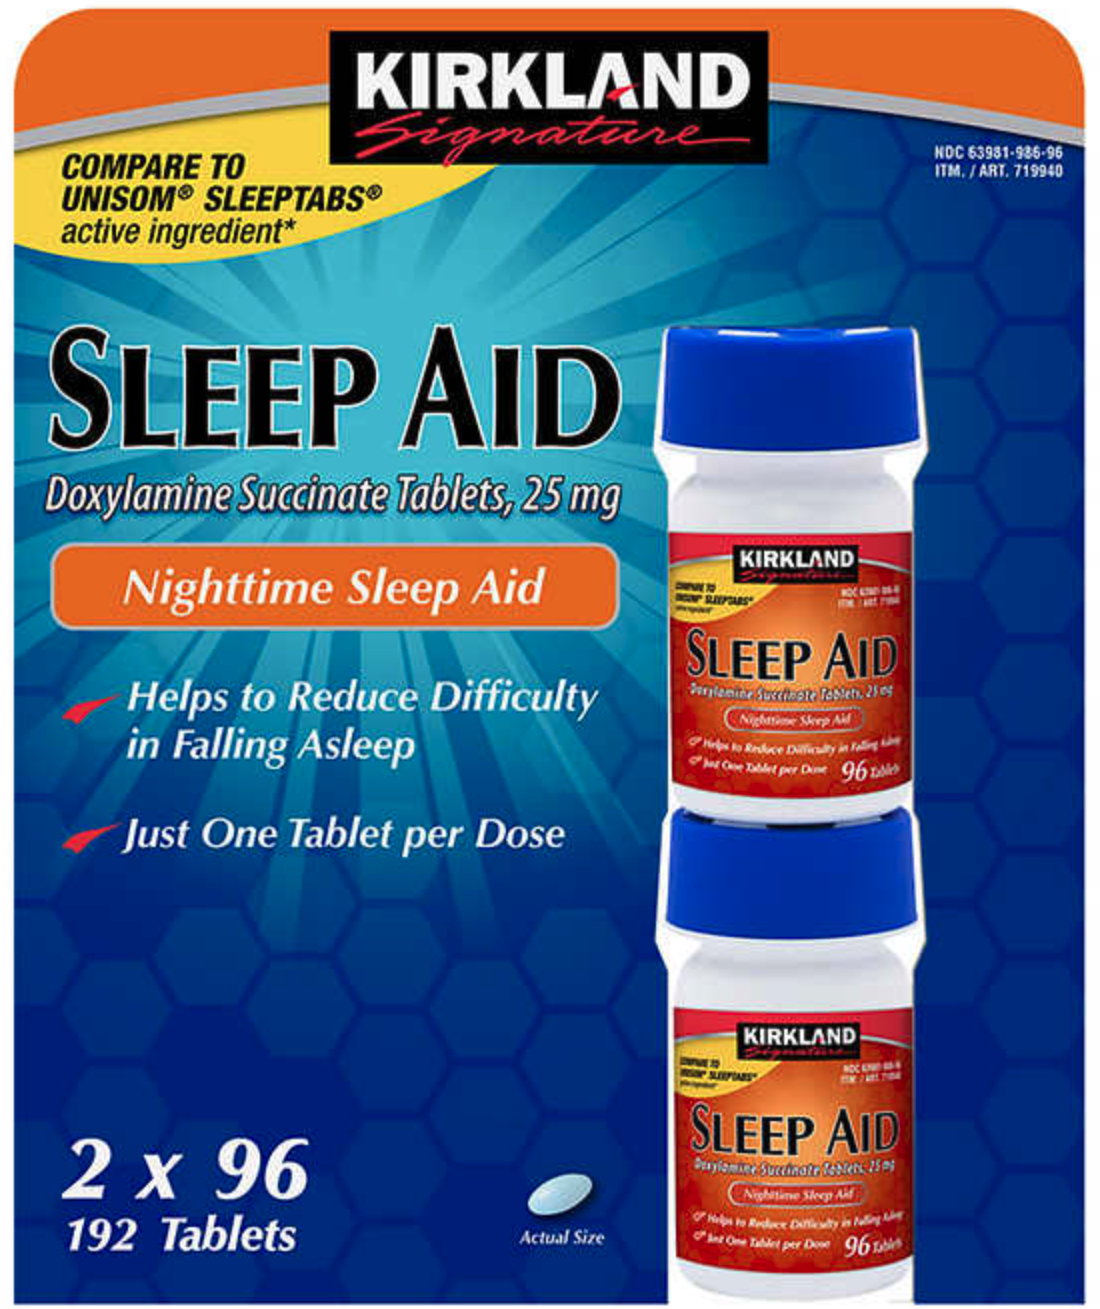 Kirkland Signature Sleep Aid Doxylamine Succinate 25 Mg 2 X 96 Tablets 192-Count Kirkland Signature 719940 - фотография #5